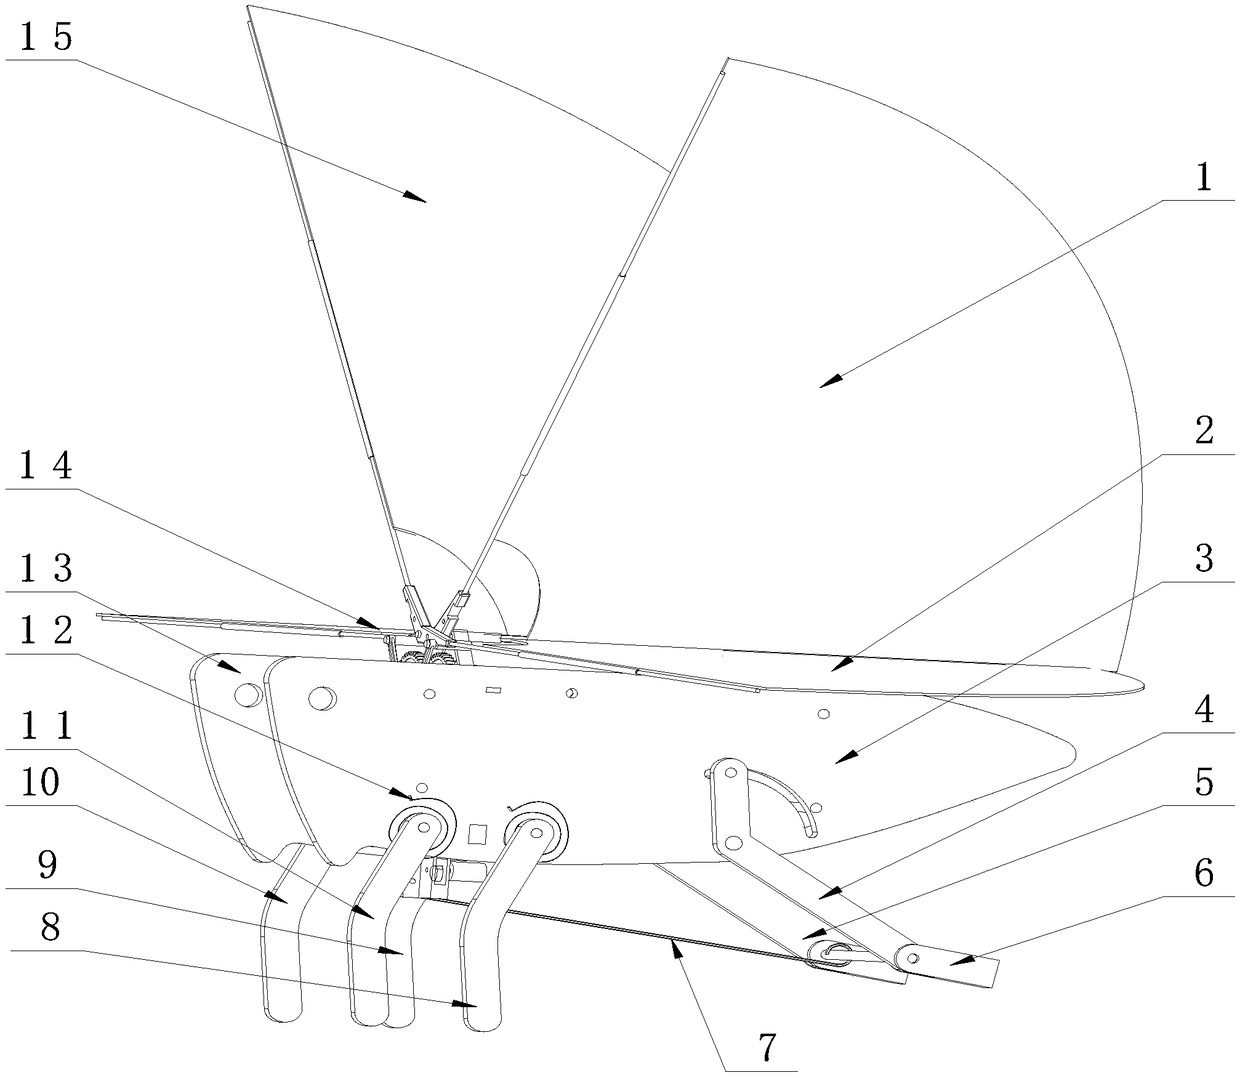 Locust-like flying jumping robot based on metamorphic mechanism and its flight control method